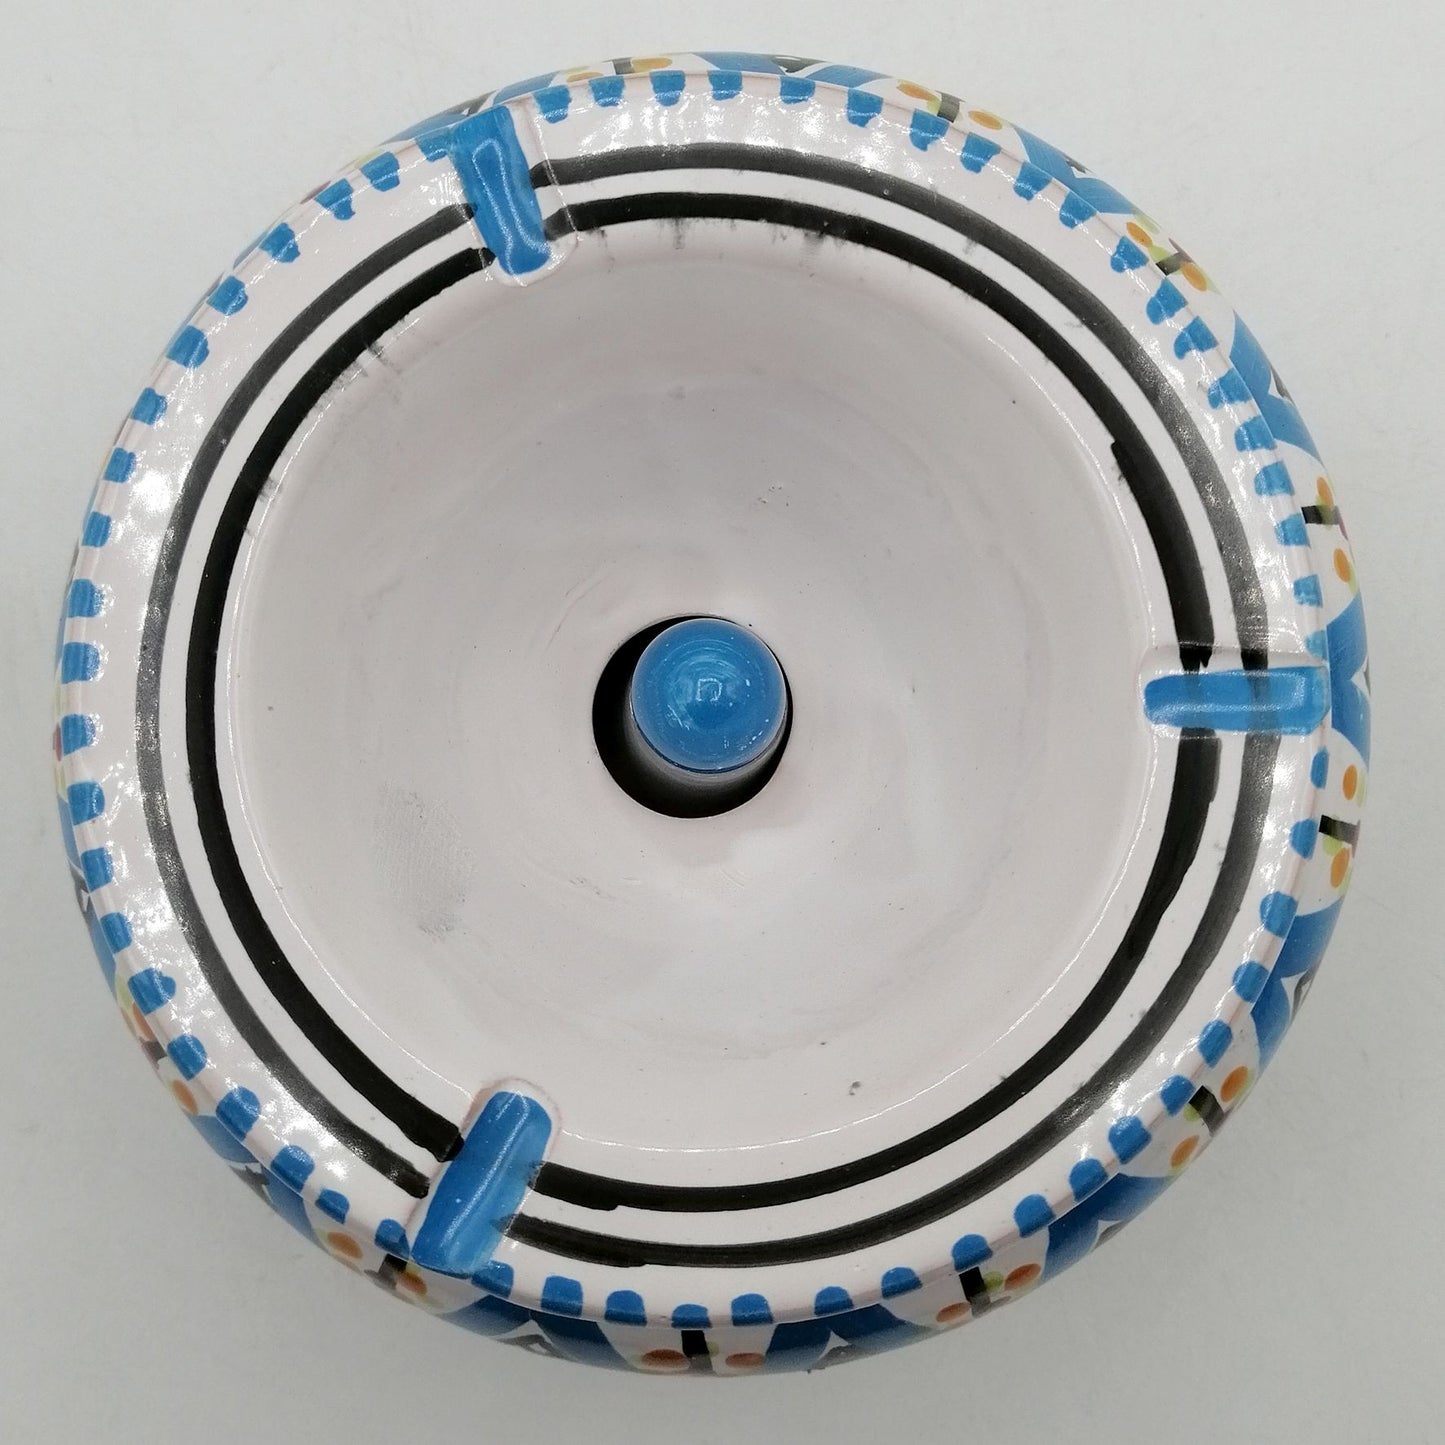 Etnico Arredo Posacenere Ceramica Antiodore Tunisina Marocchine 1211201105